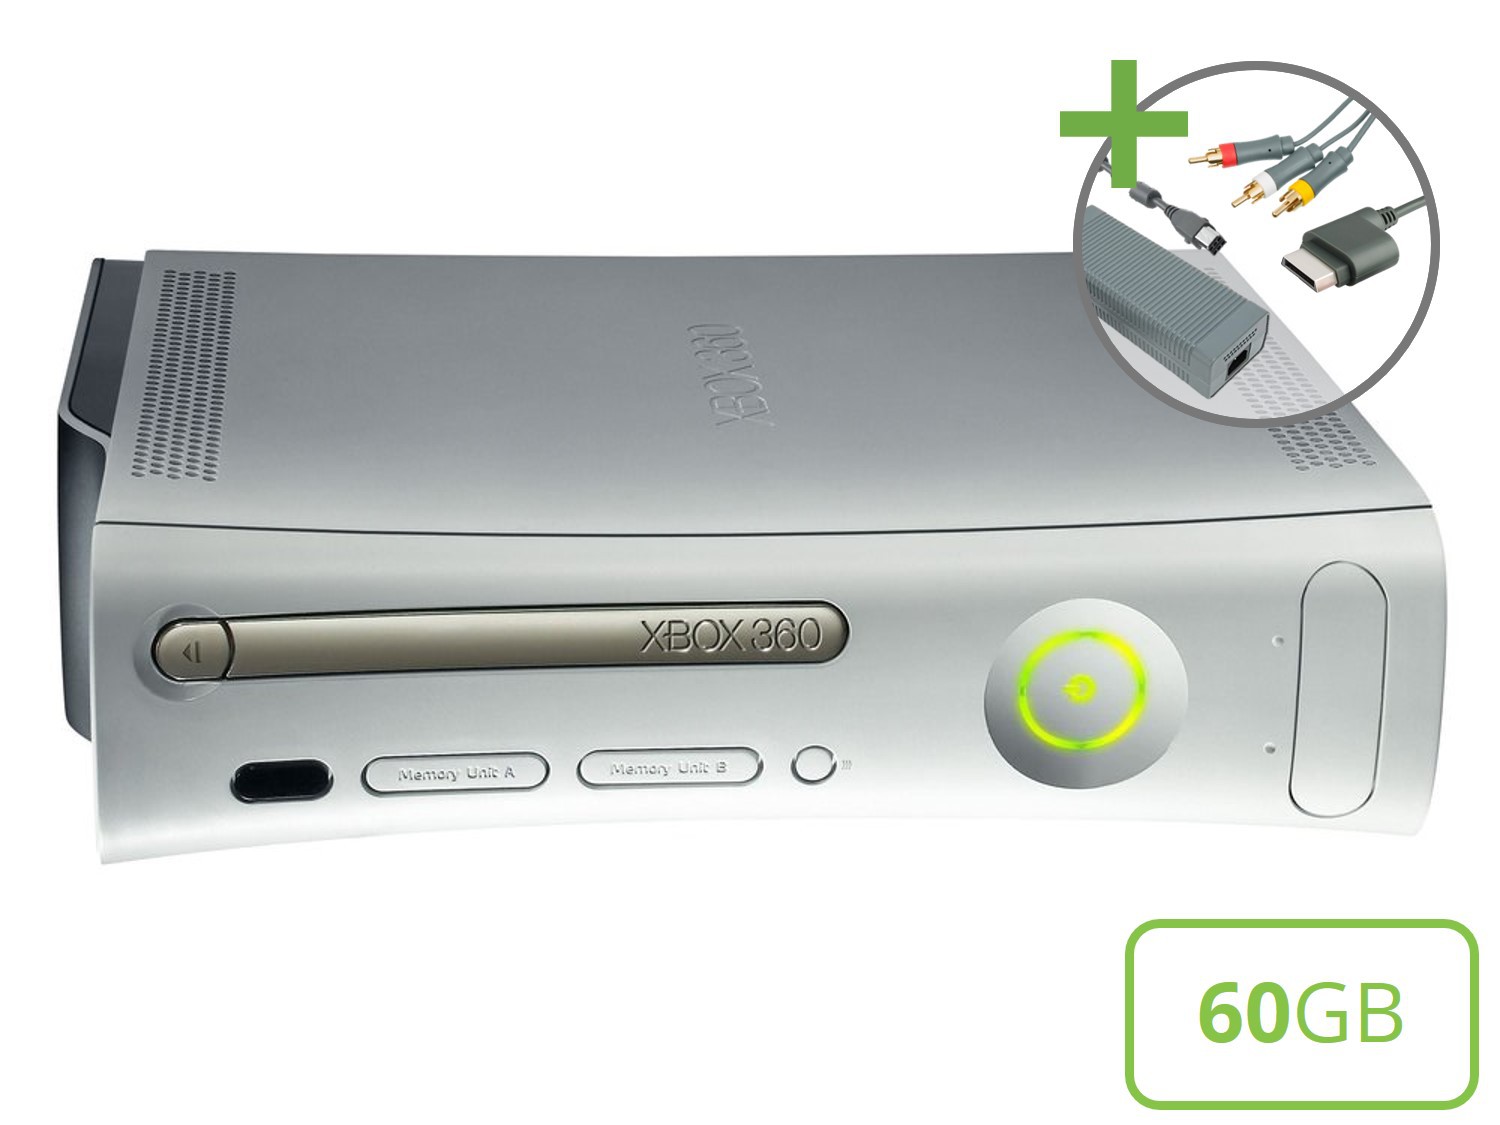 Microsoft Xbox 360 Premium Starter Pack - 60GB Basic Gold Edition - Xbox 360 Hardware - 2